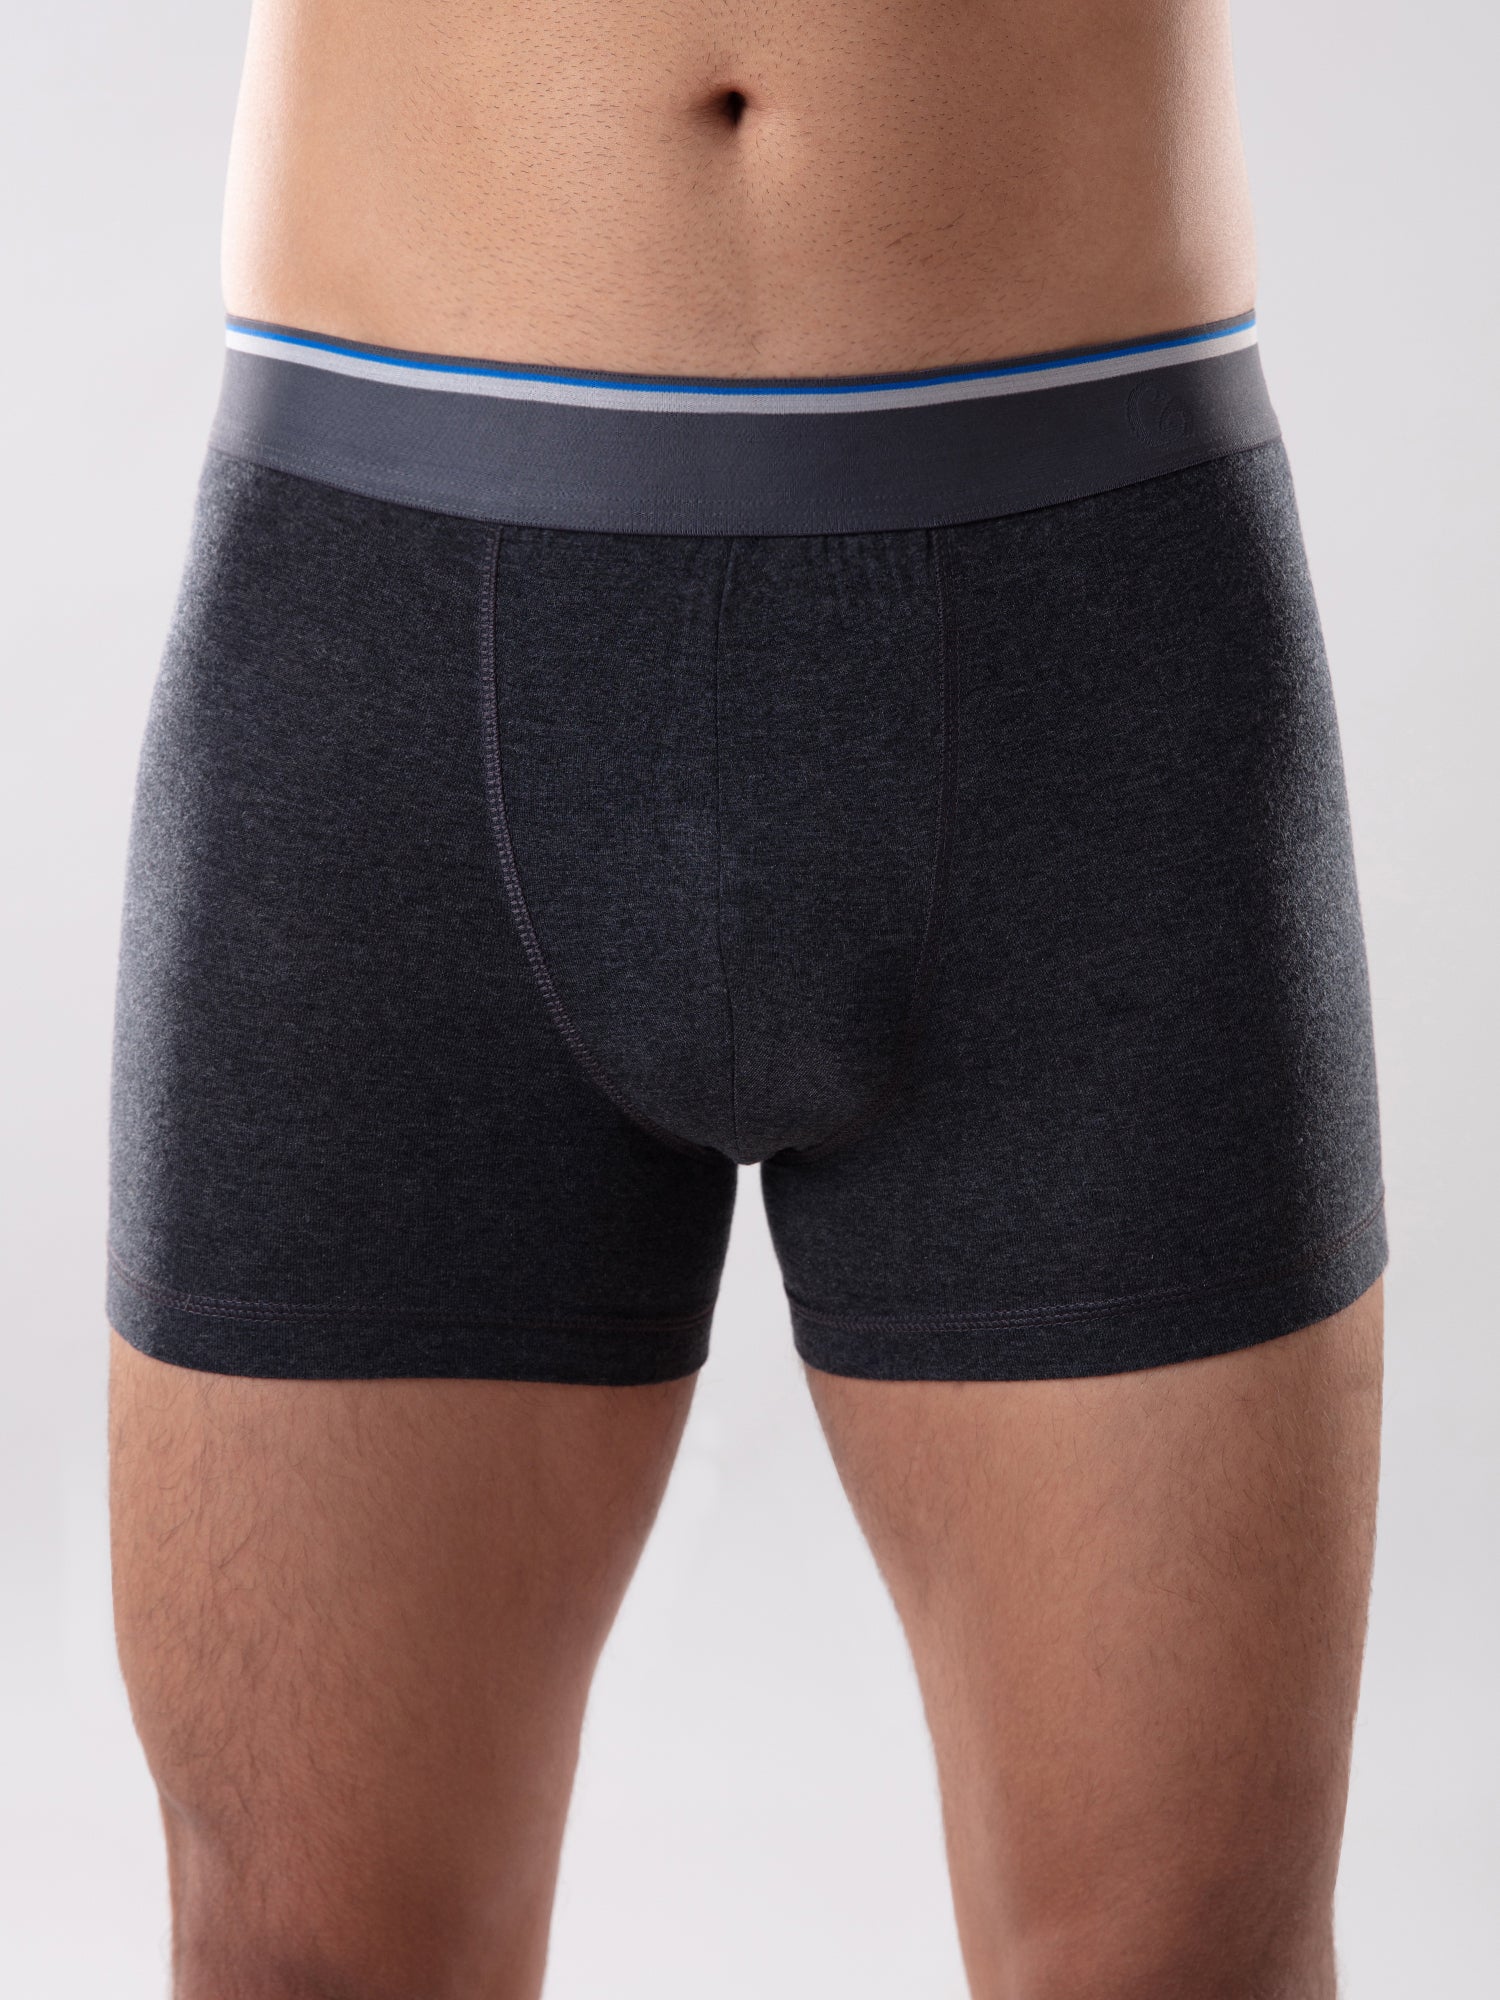 Short men's boxer trunk, cool gray, Tencel Micro Modal underwear